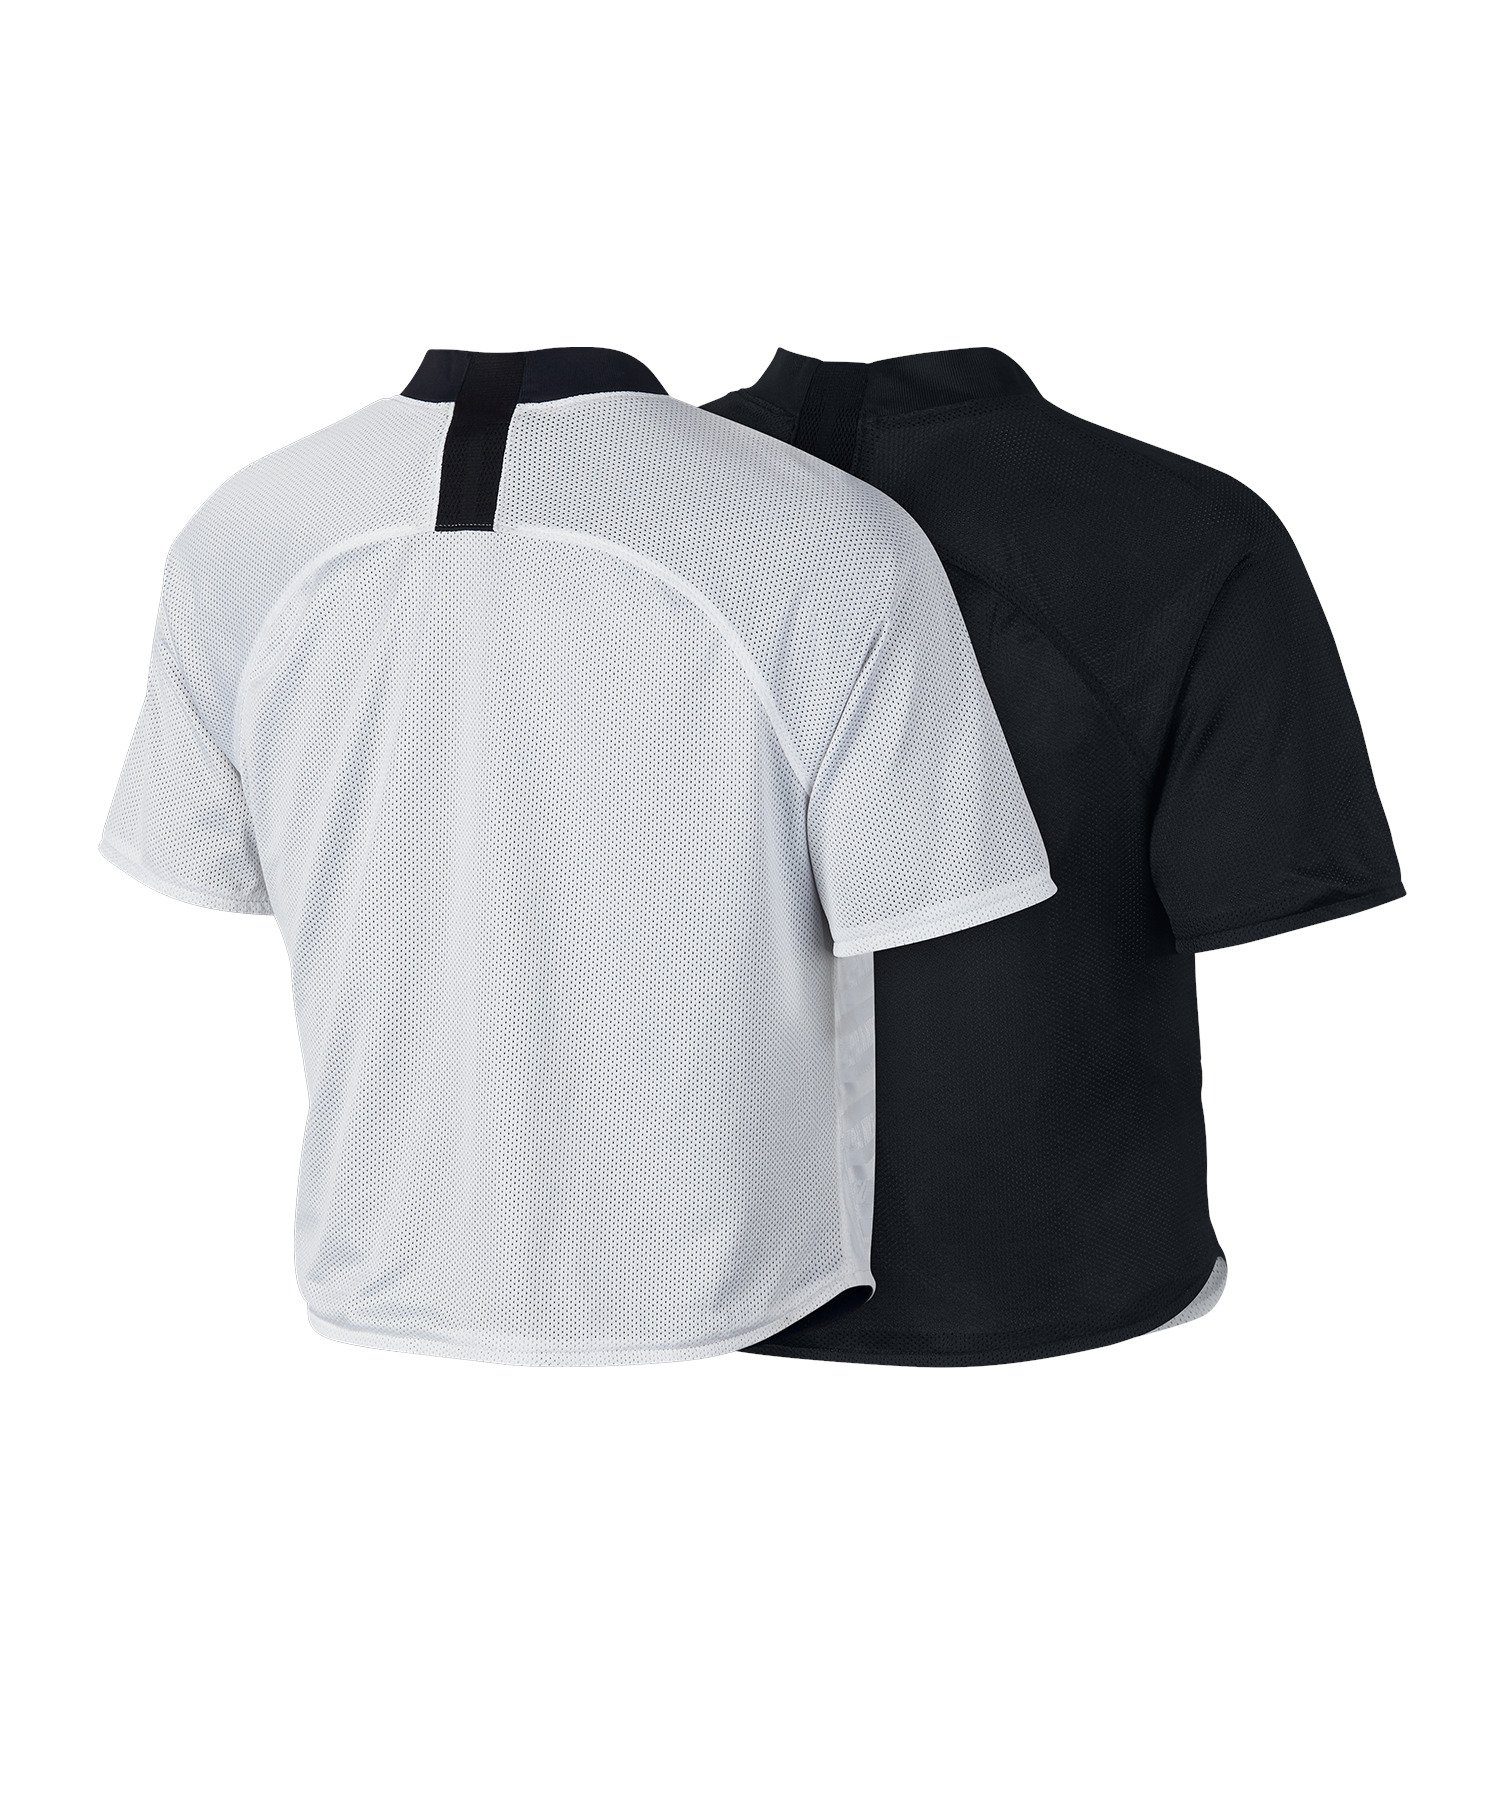 Top T-Shirt Sportswear Crop Damen Nike Schwarz default F.C.